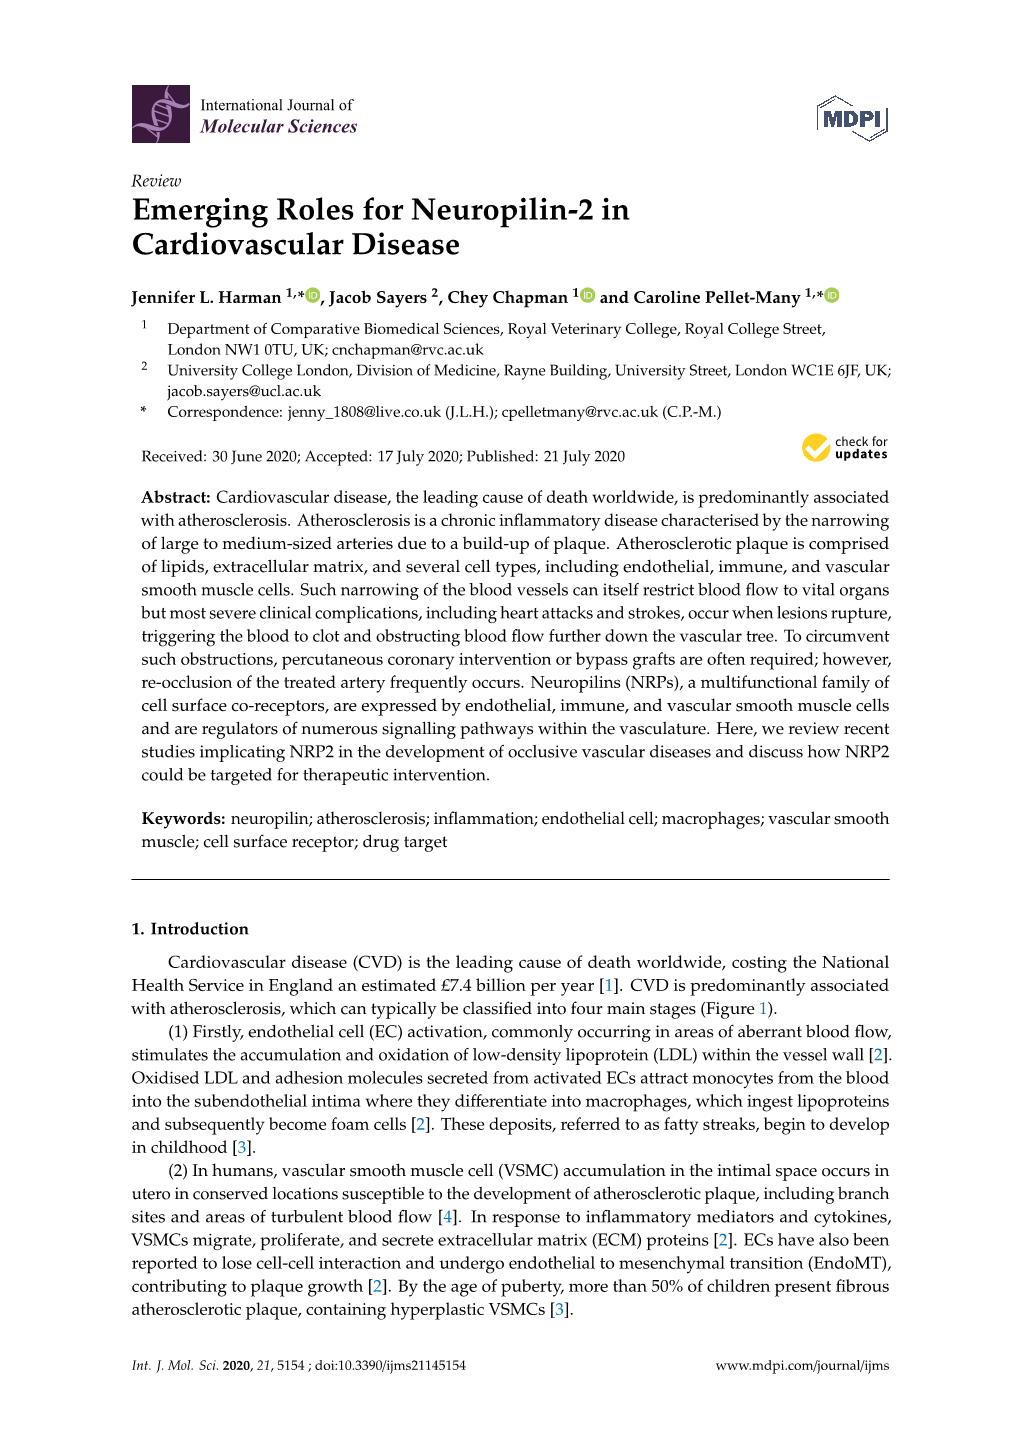 Emerging Roles for Neuropilin-2 in Cardiovascular Disease